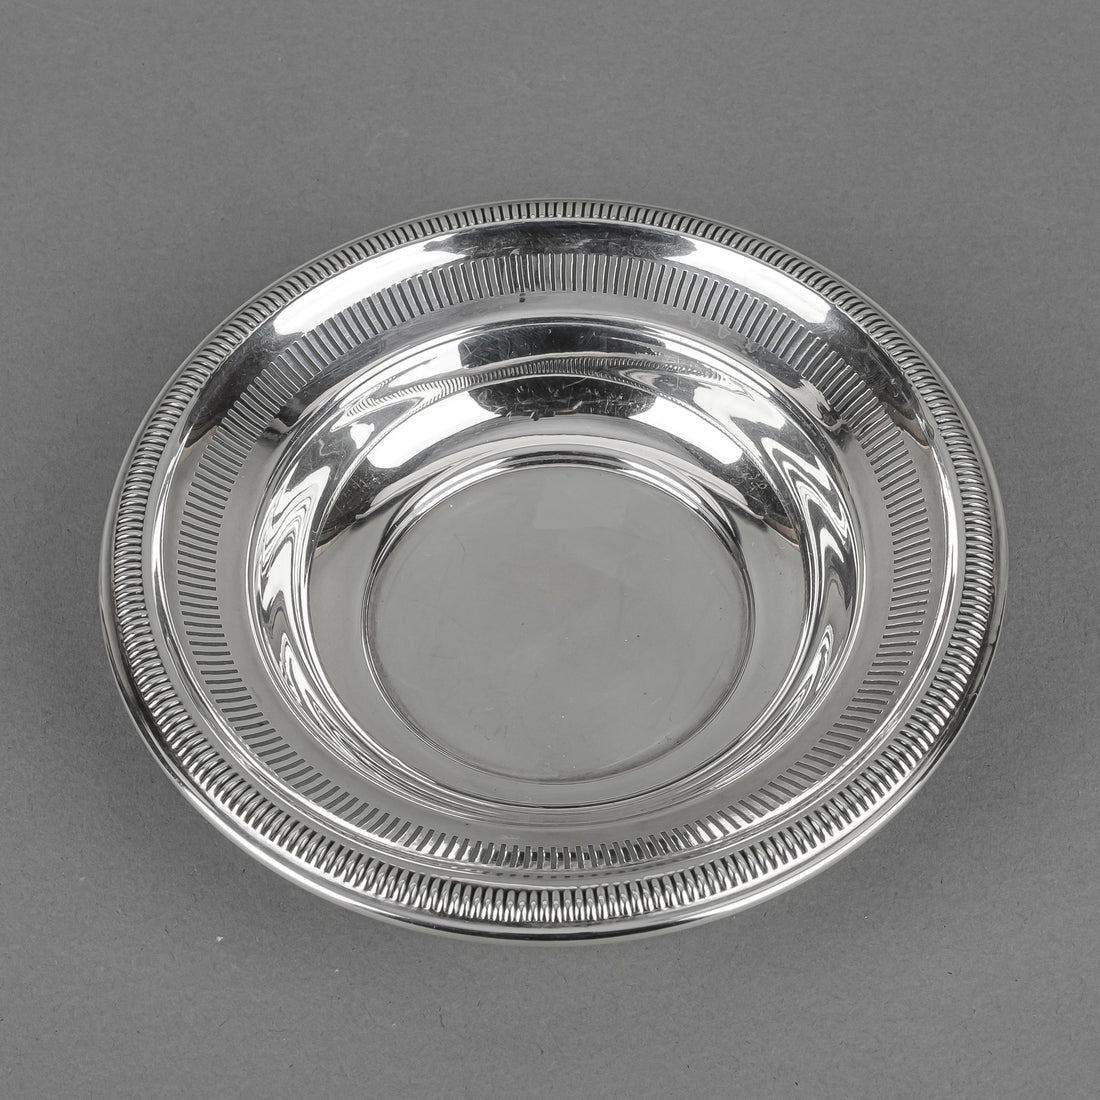 INTERNATIONAL STERLING Sterling Silver Pierced Dish